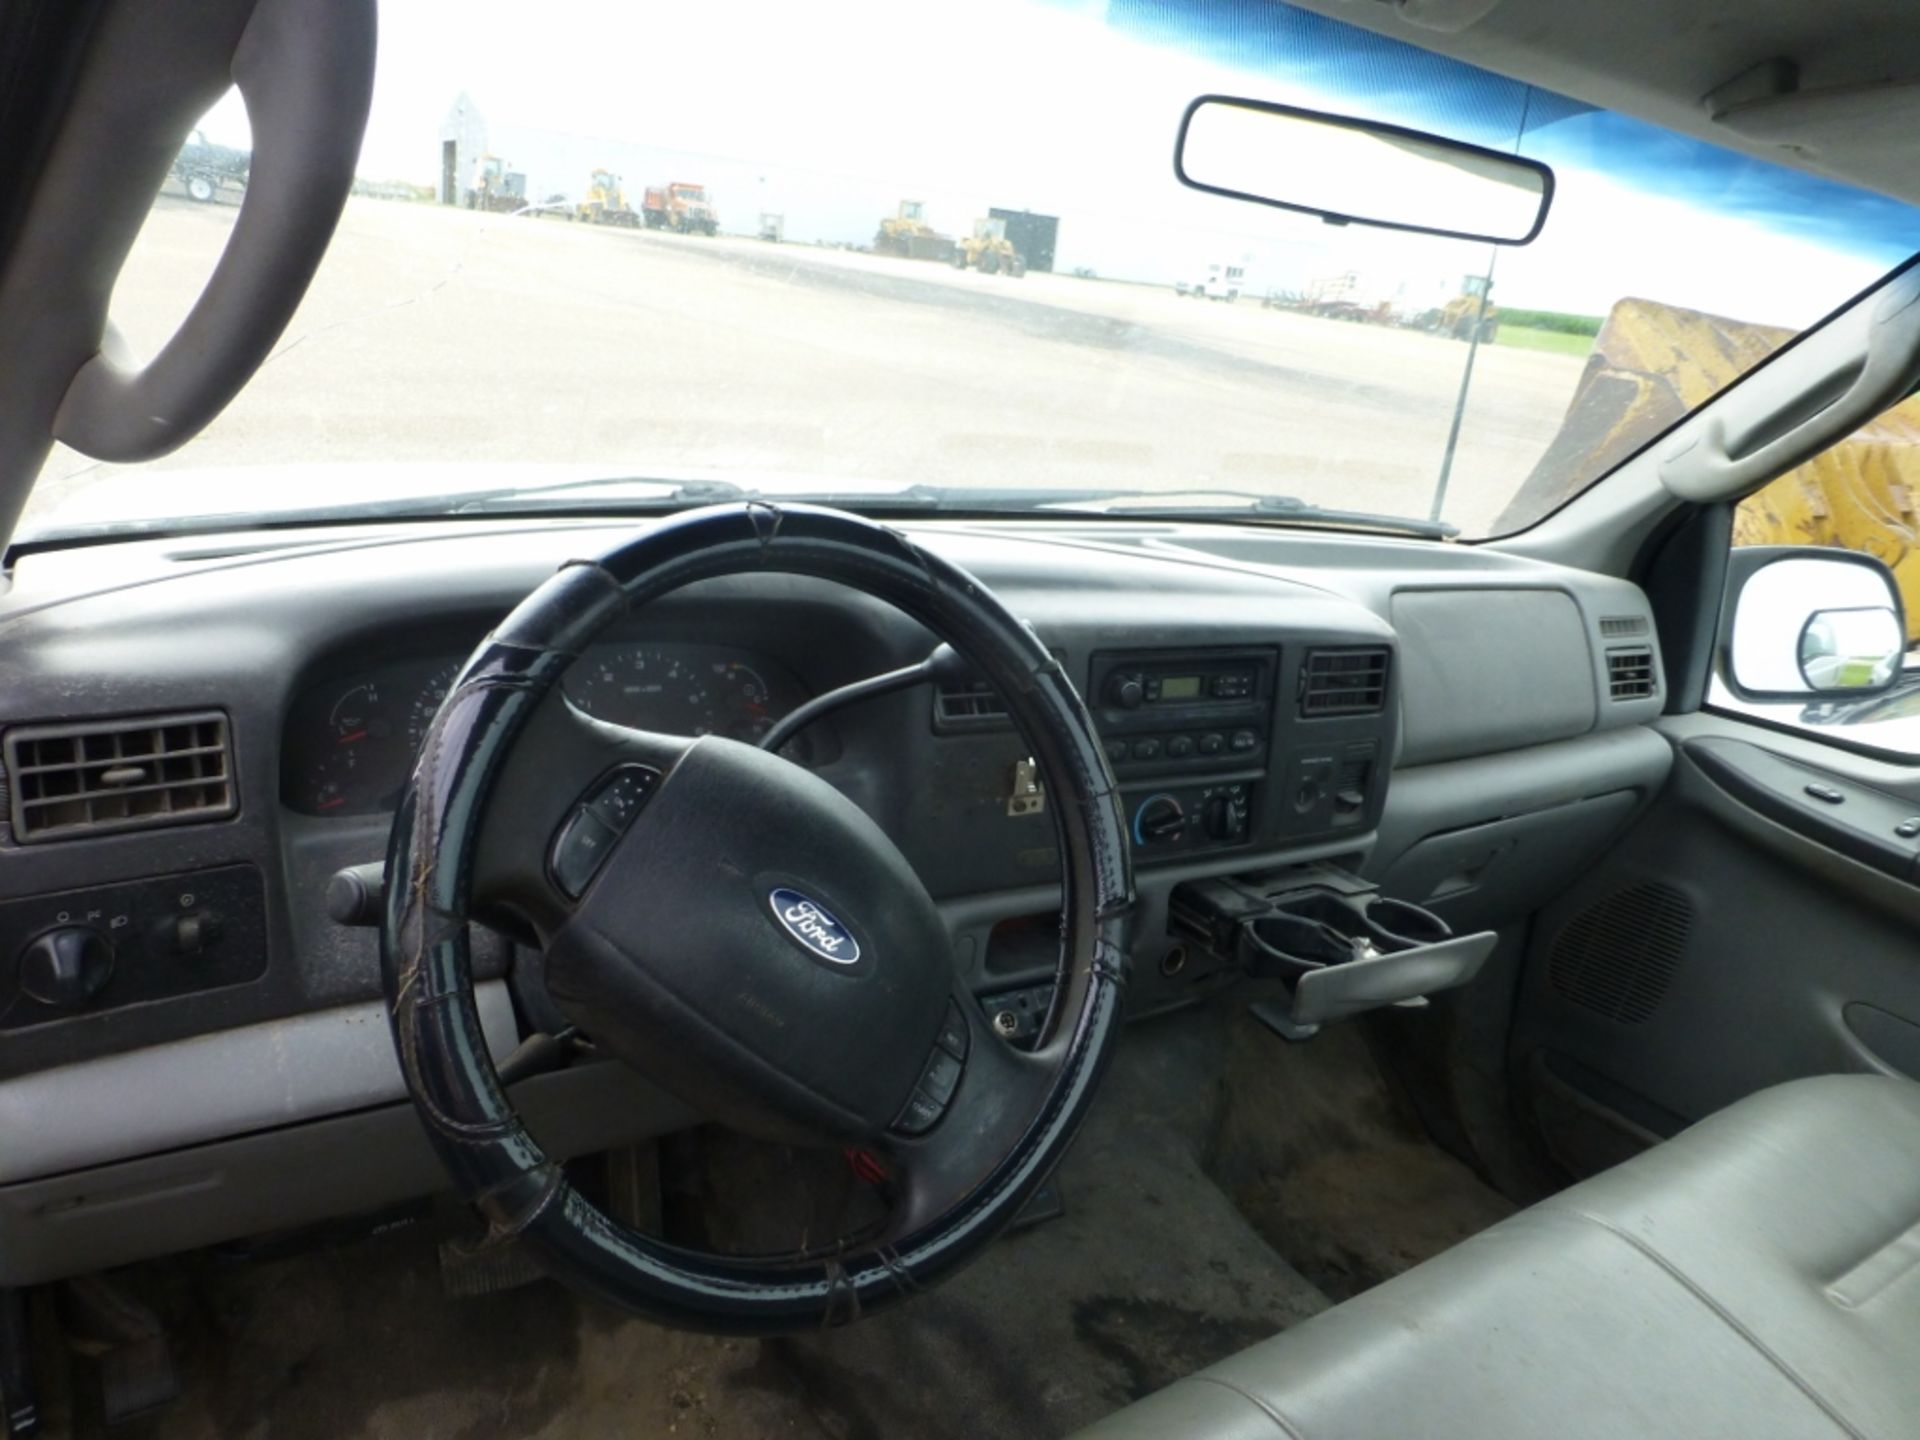 2003 Ford F-250 XL Superduty, regular cab. 4x2, automatic . Cracked windshield, weak transmission. - Image 22 of 25